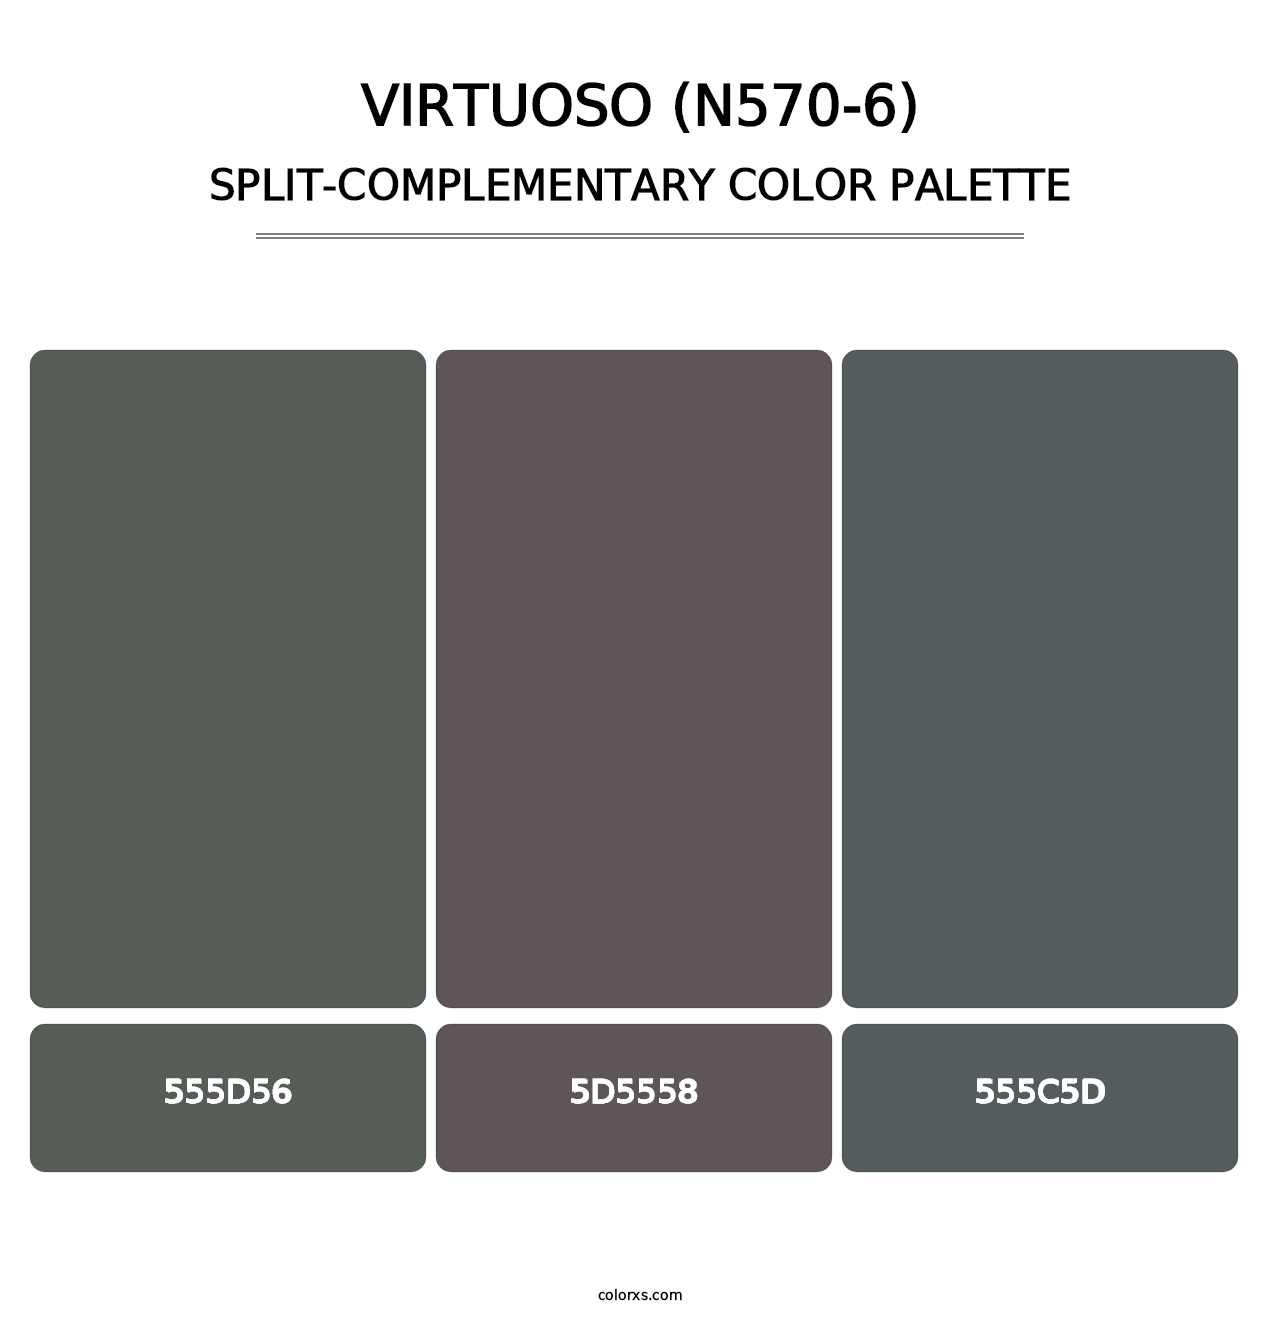 Virtuoso (N570-6) - Split-Complementary Color Palette